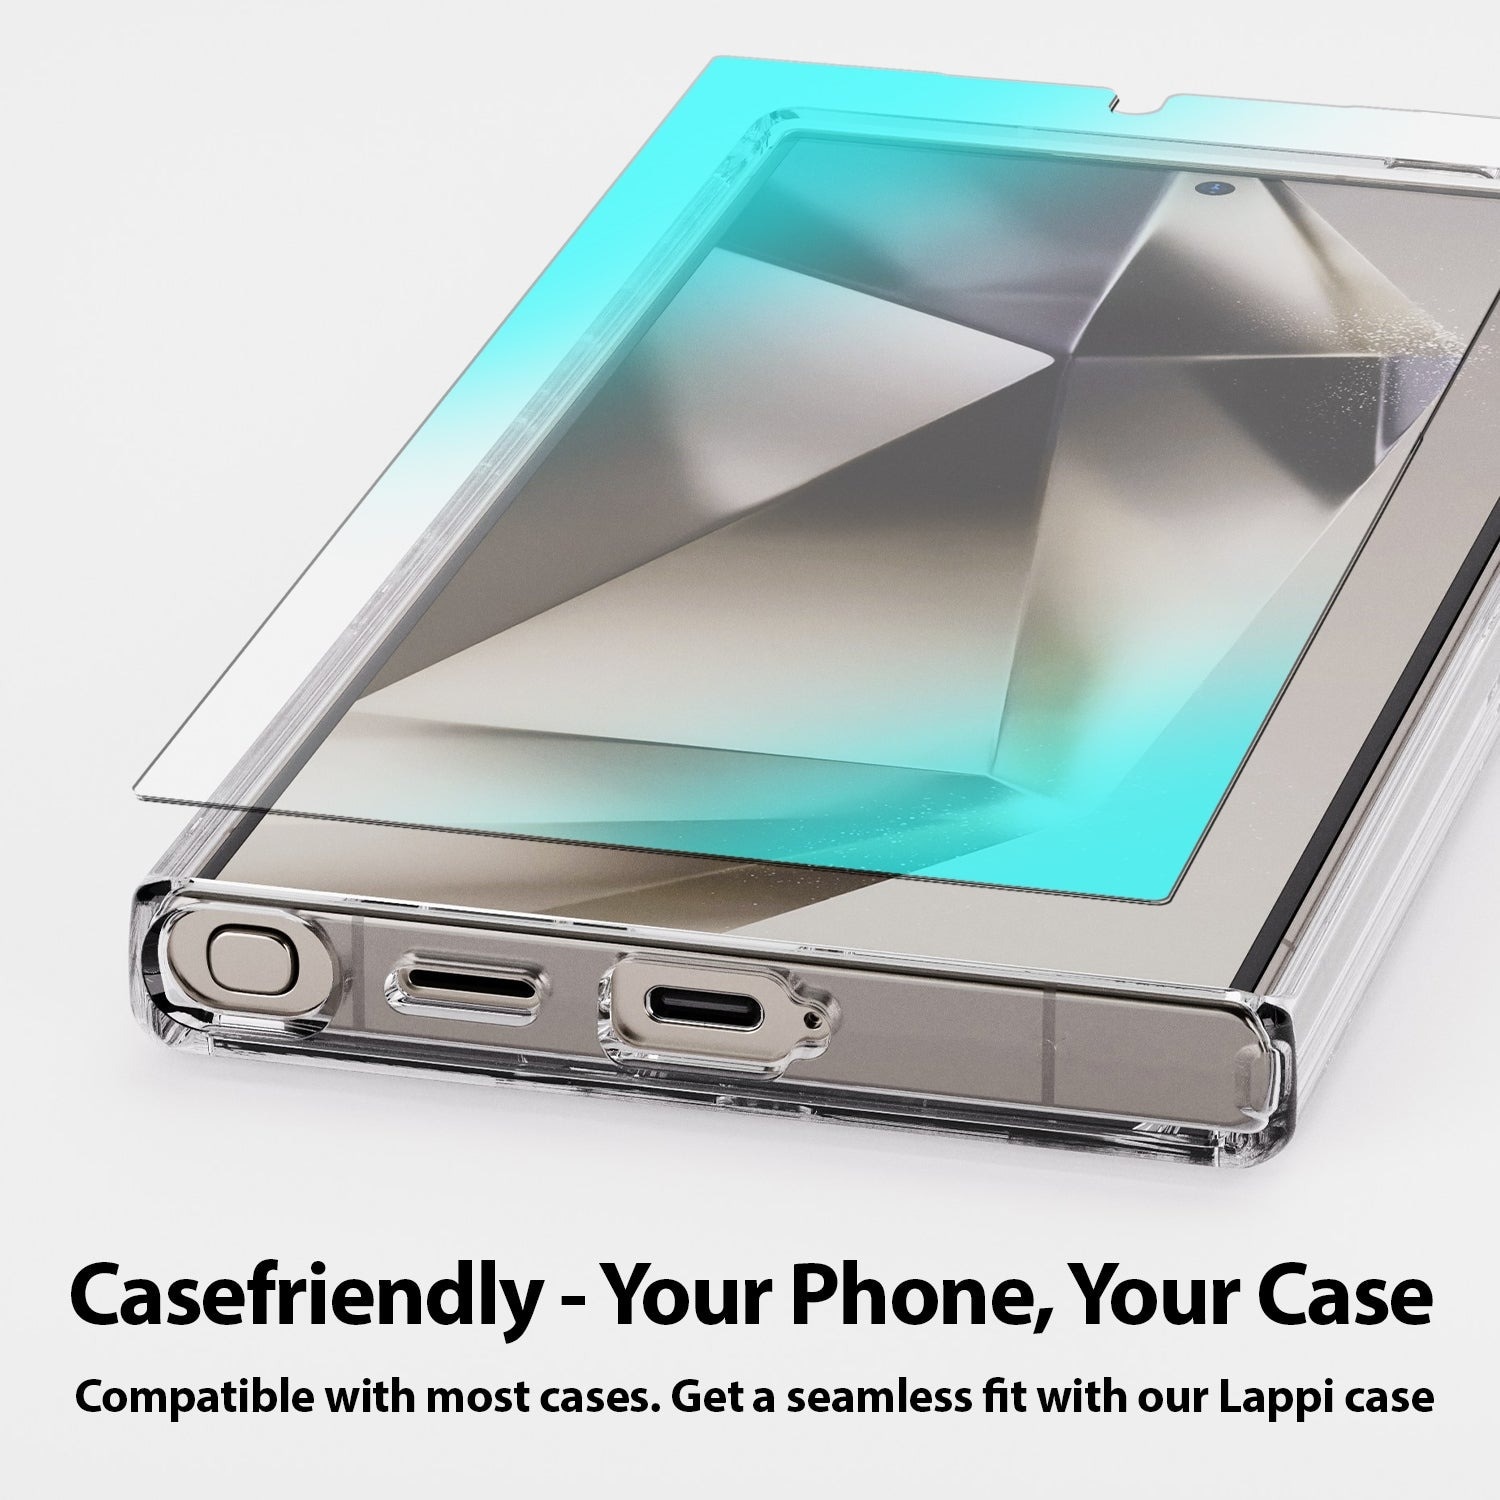 Whitestone Dome Glass Screen Protector (2 Stück) Samsung Galaxy S24 Ultra